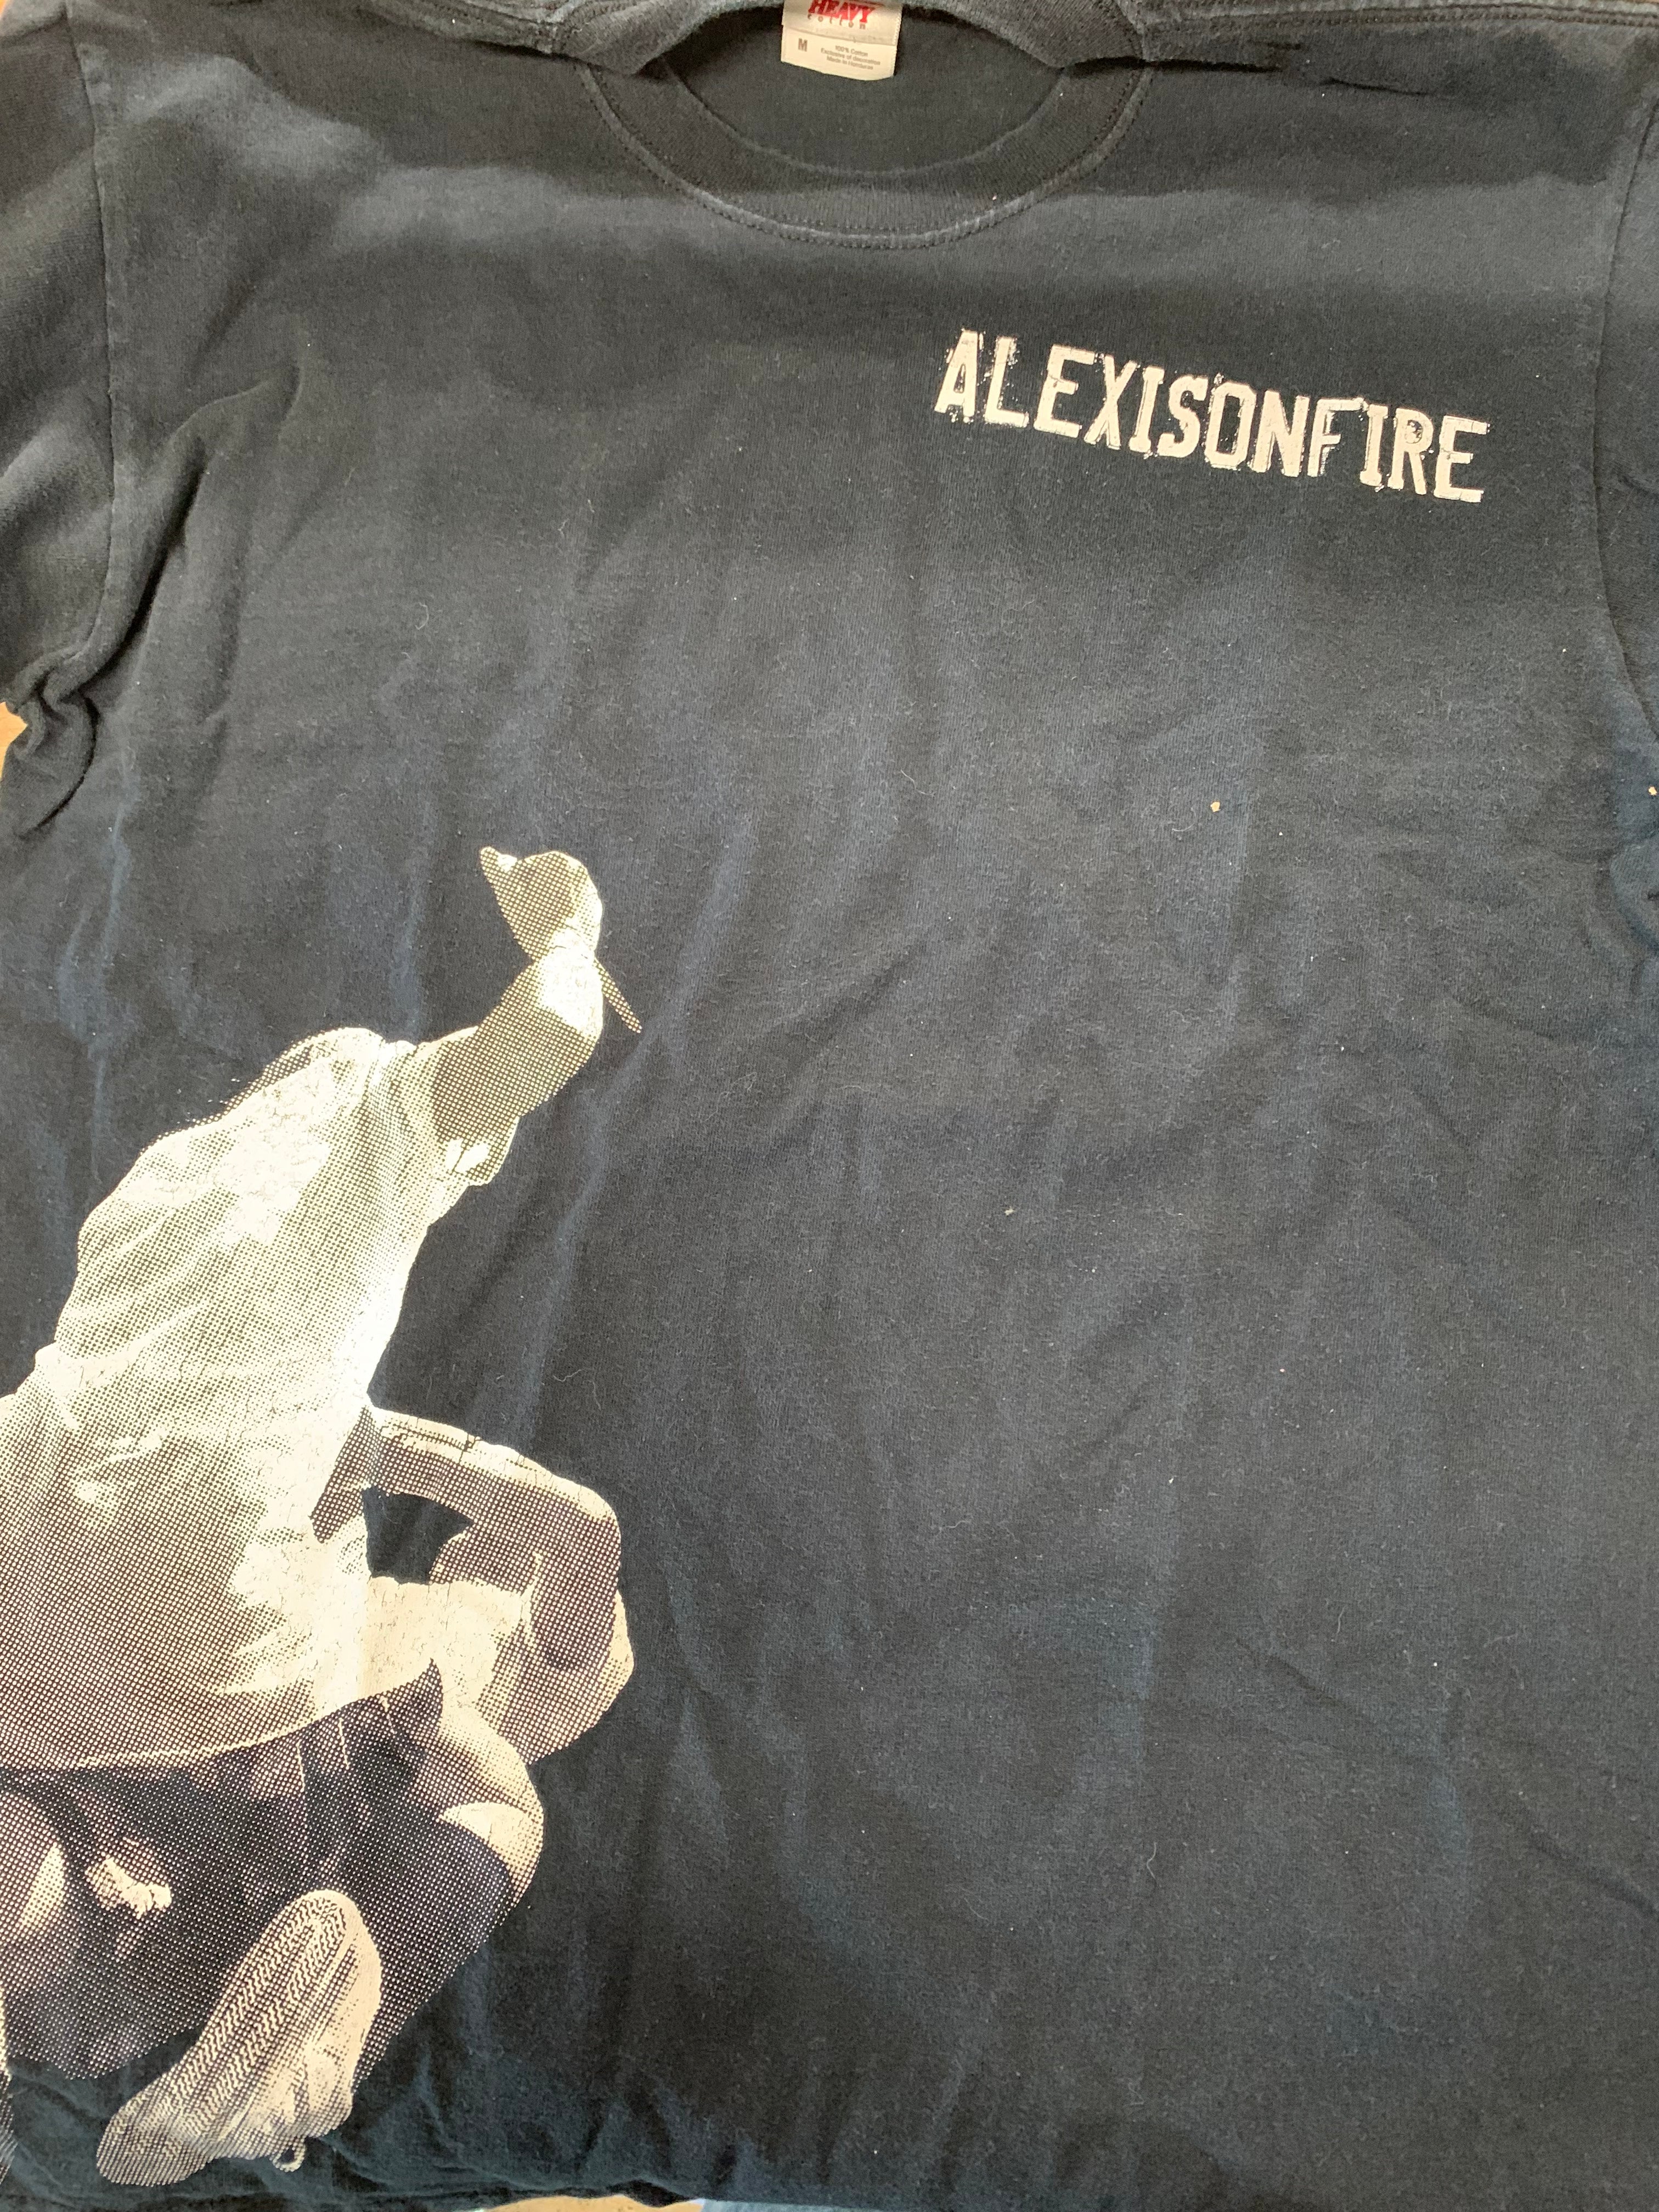 Alexisonfire Knife Fight Side Graphic T-Shirt, Black, M